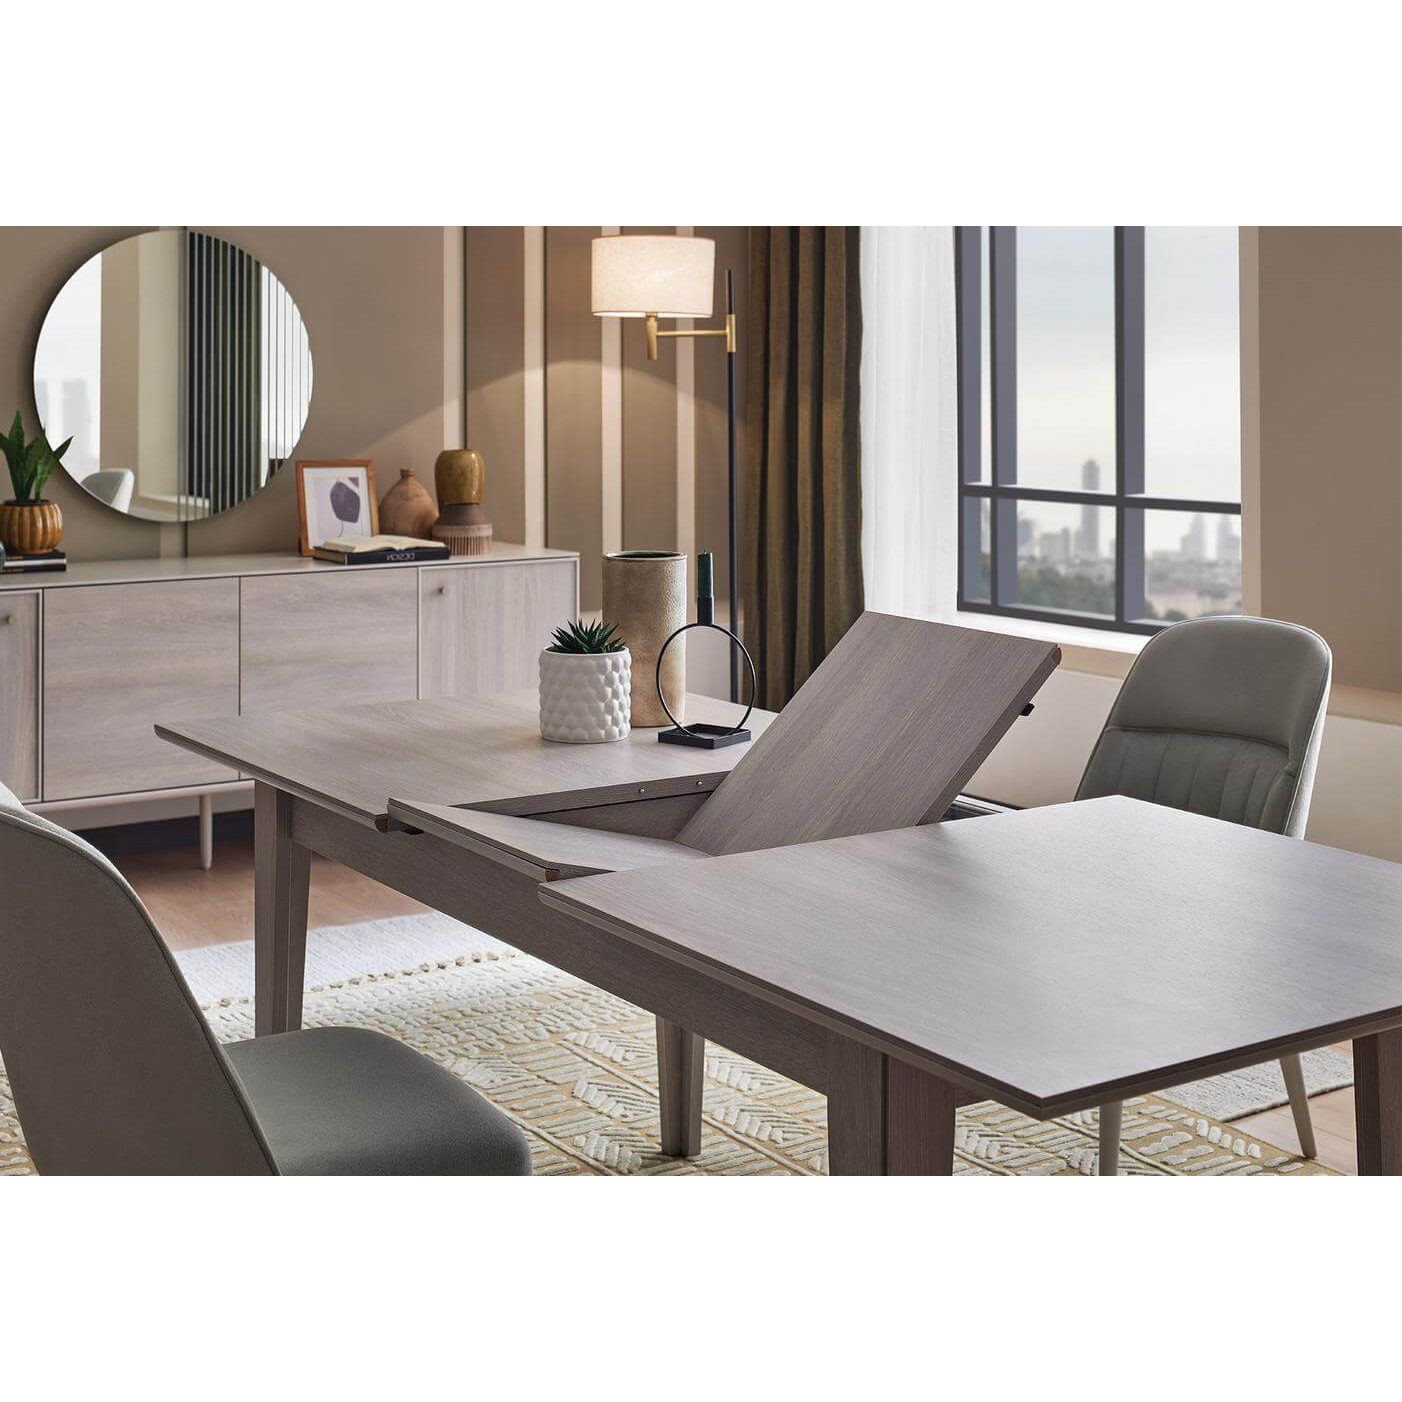 Стол обеденный Enza Home Basel, раздвижной, размер 160(200)х90х77 см07.182.0611.0000.0053.0000.